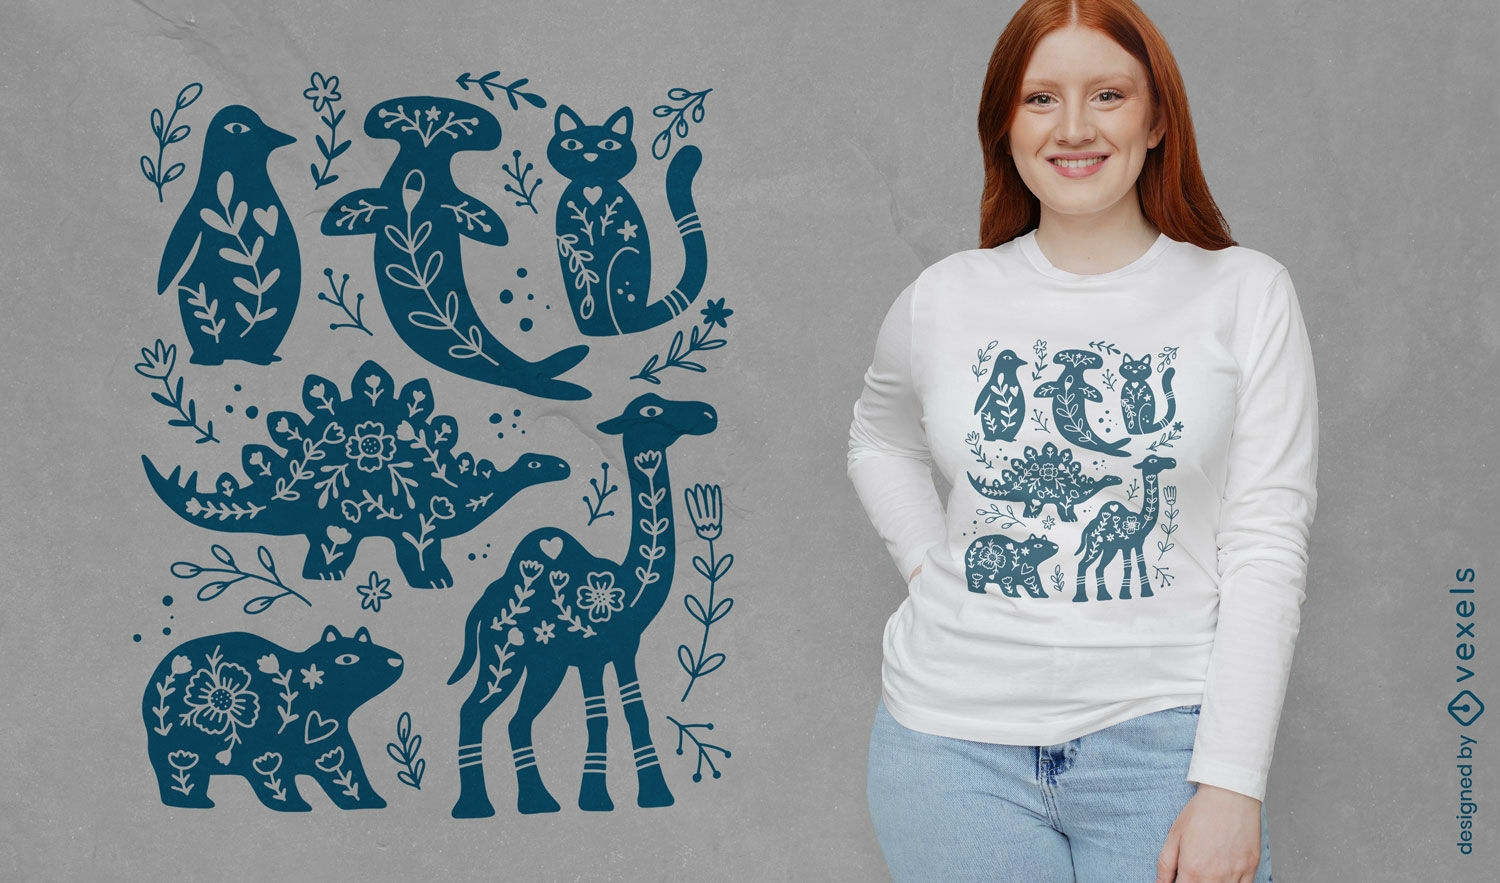 Blue animals cut out t-shirt design